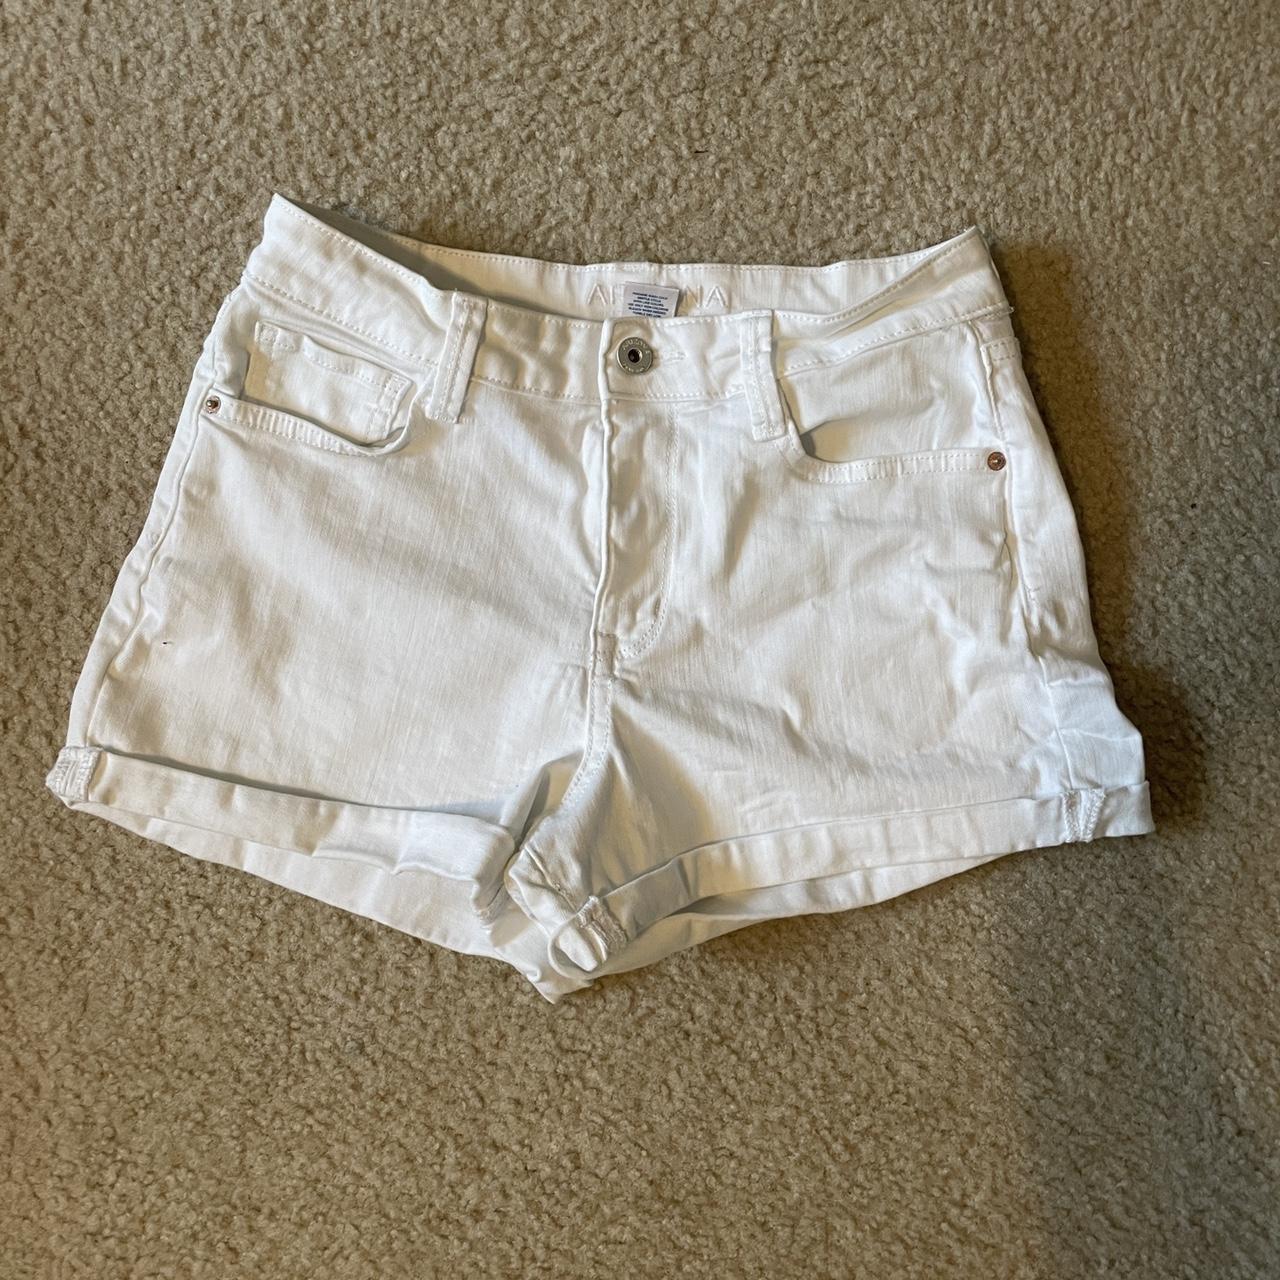 Arizona Women's White Shorts